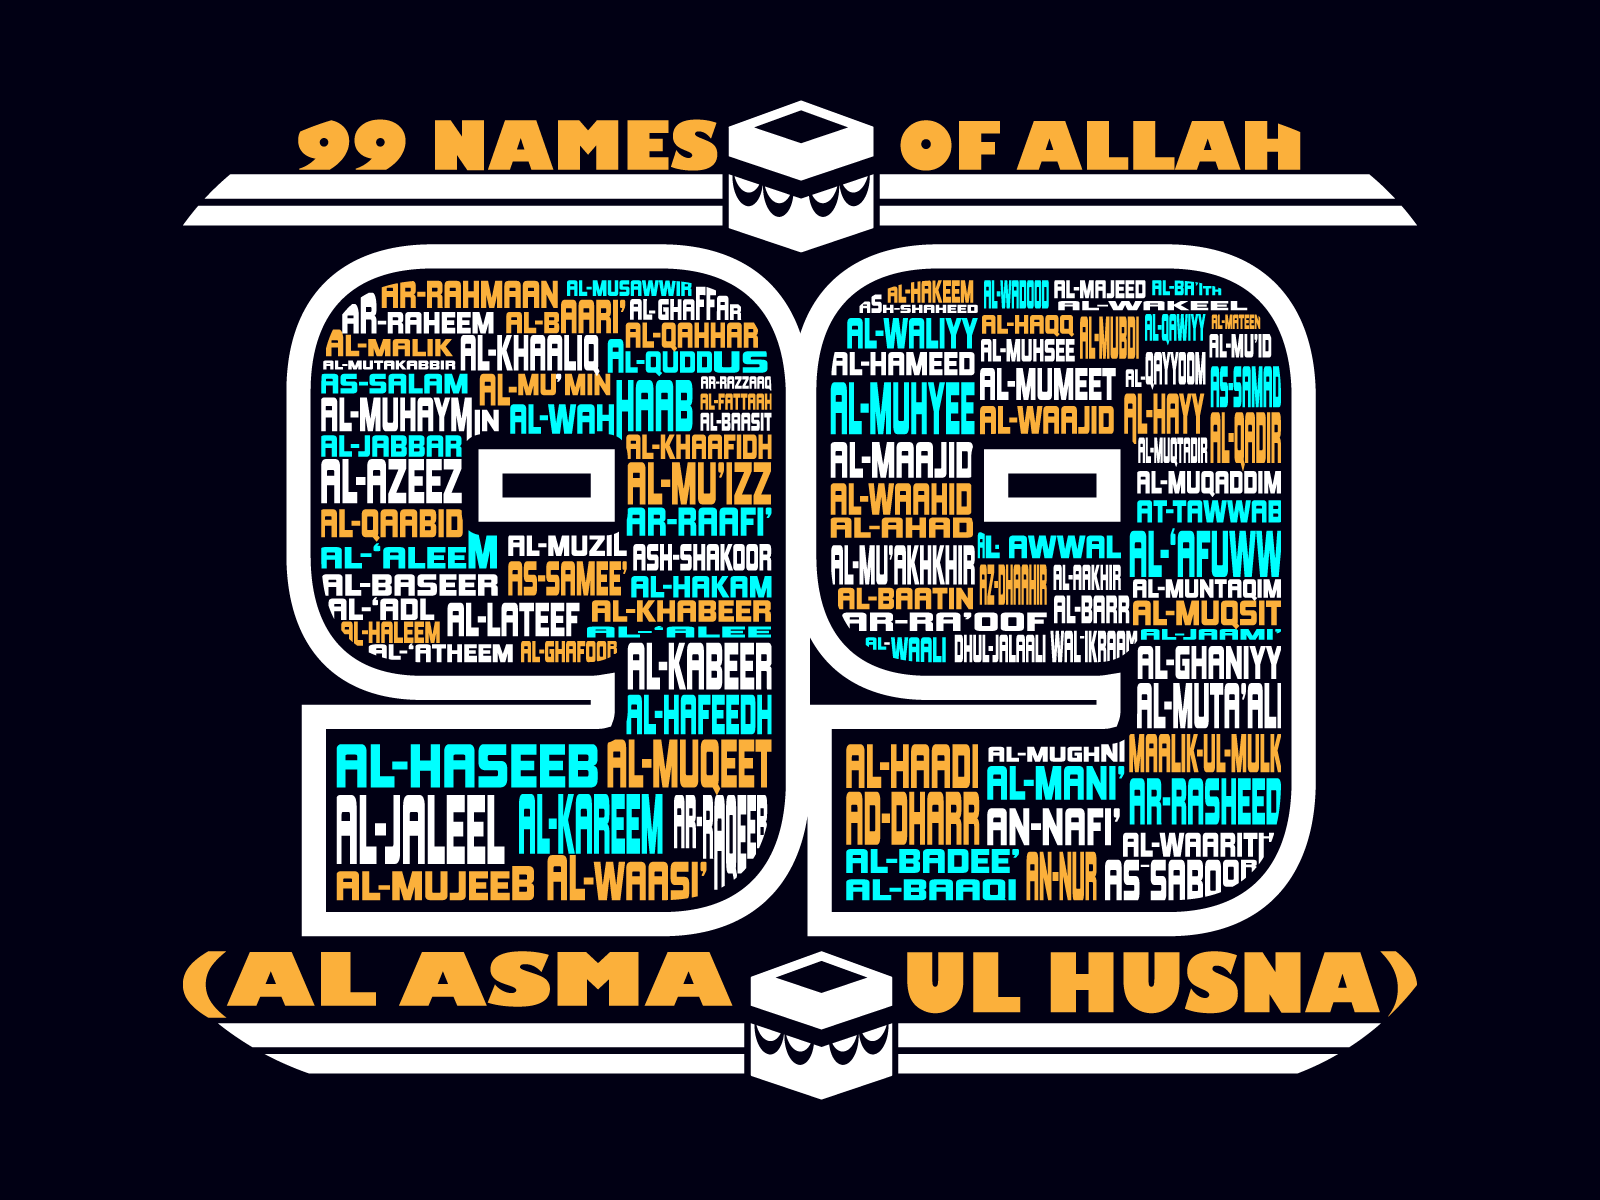 99 name of allah